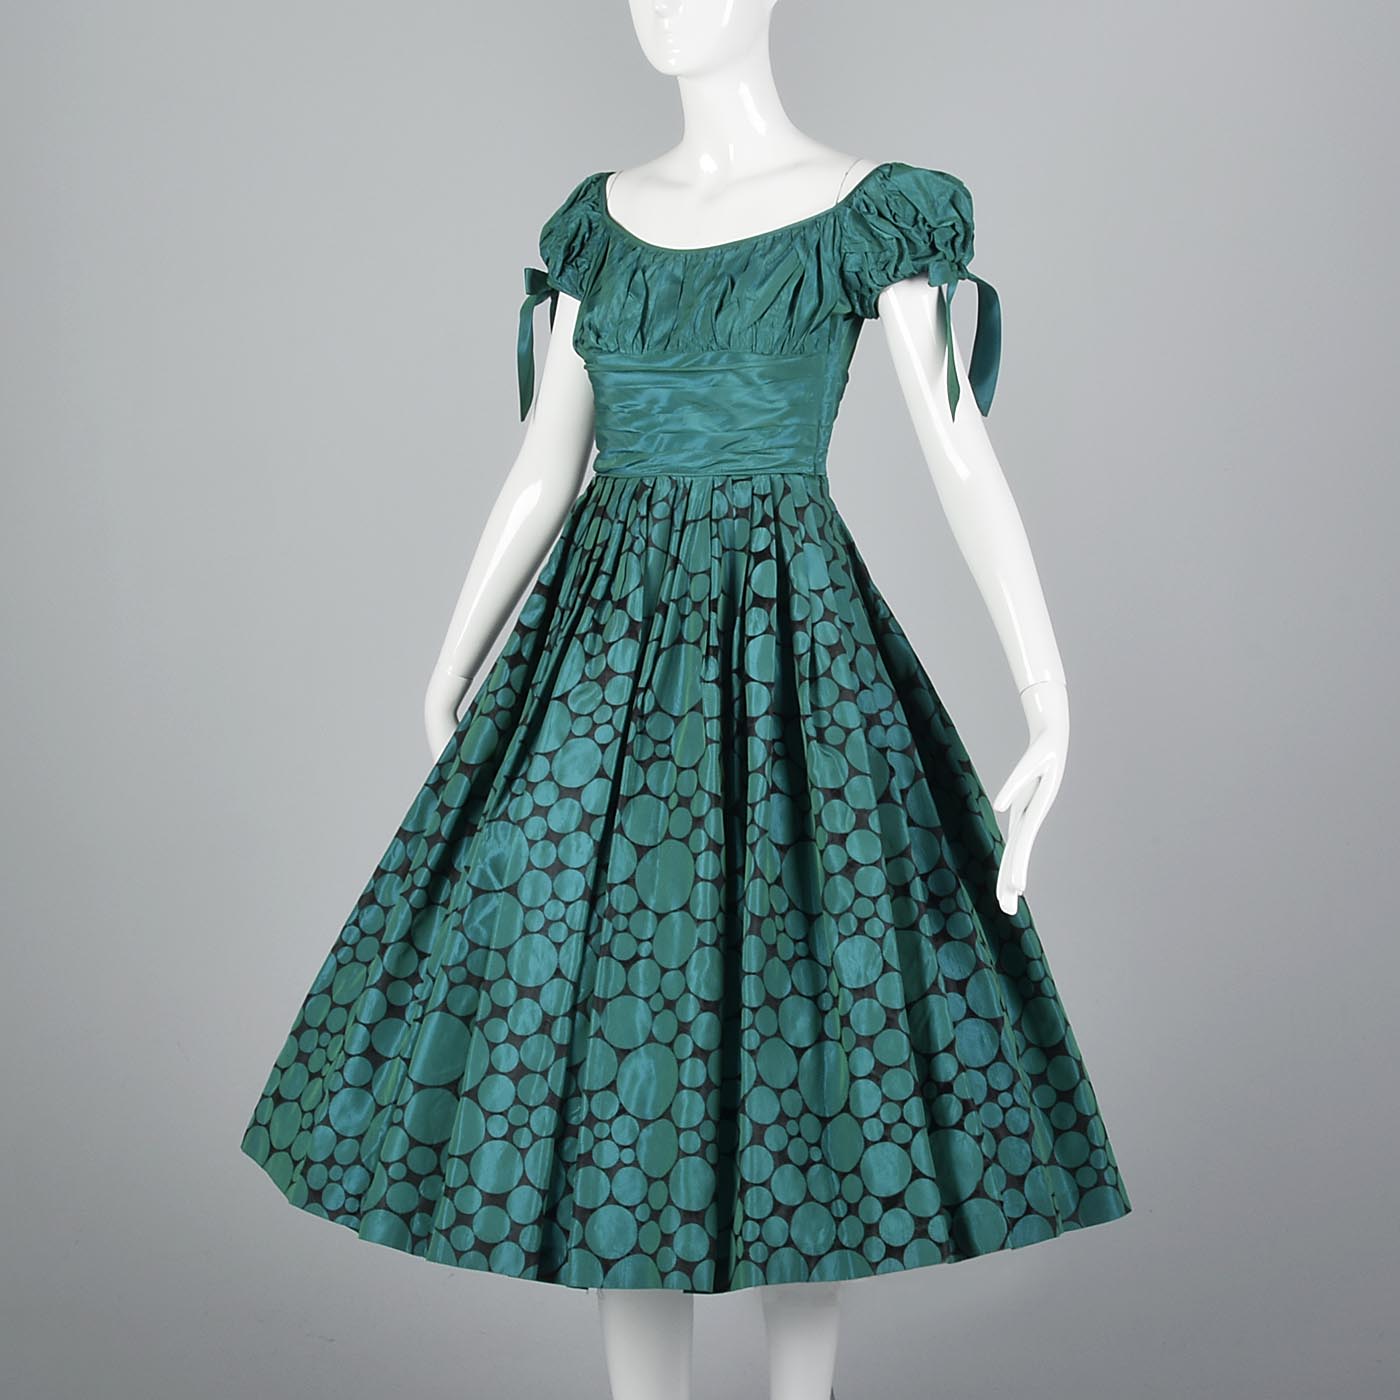 1950s Flocked Polkadot Party Dress